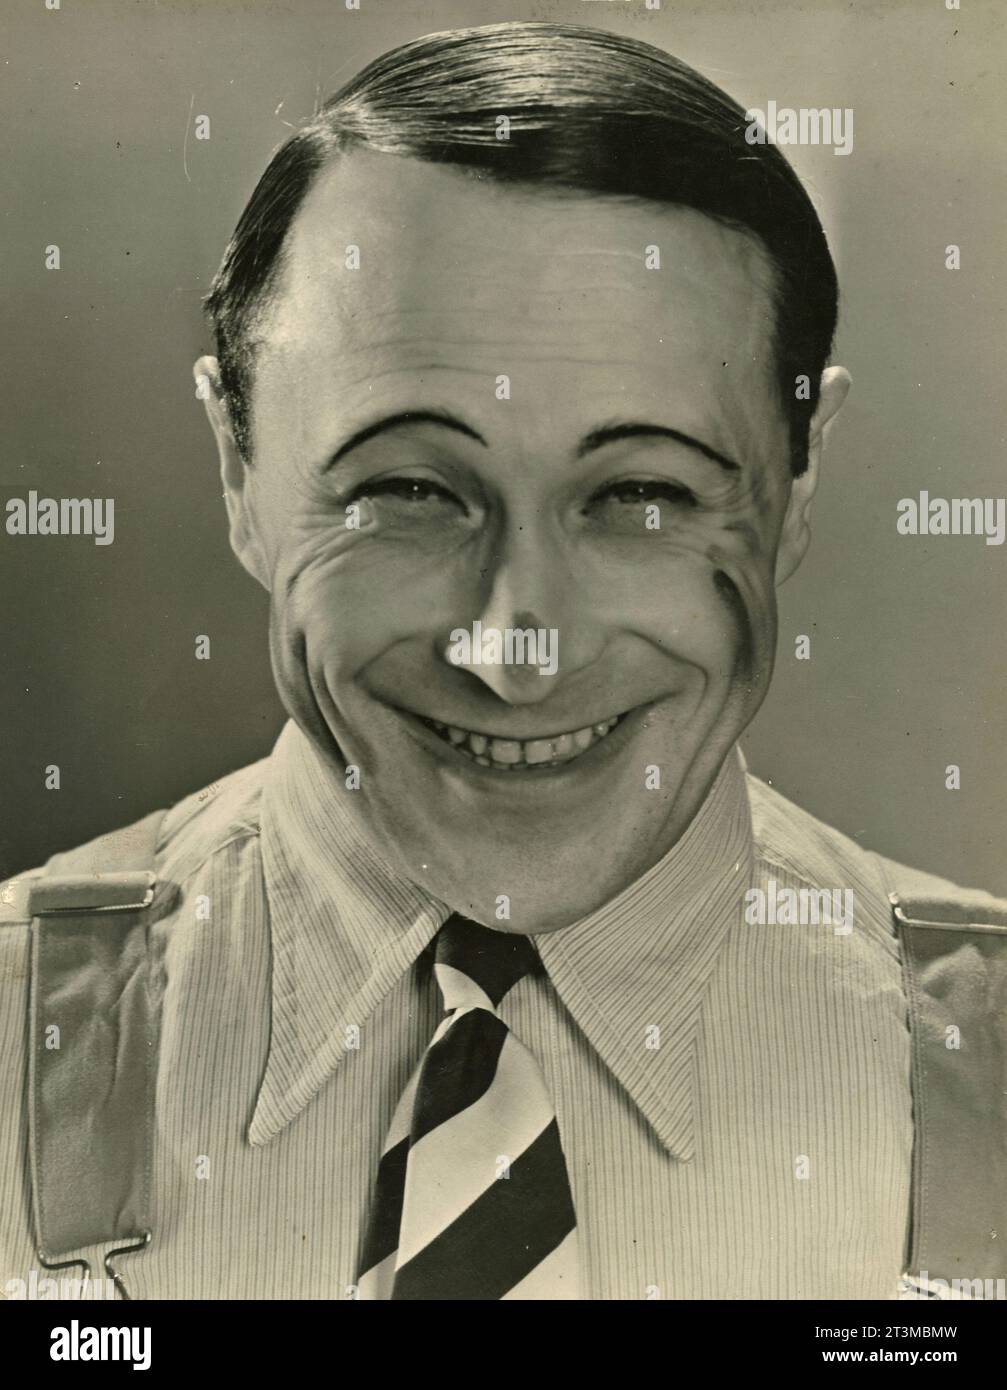 El actor danés Hans W. Petersen en la película Ud i Den kolde SNE, Dinamarca 1930 Foto de stock